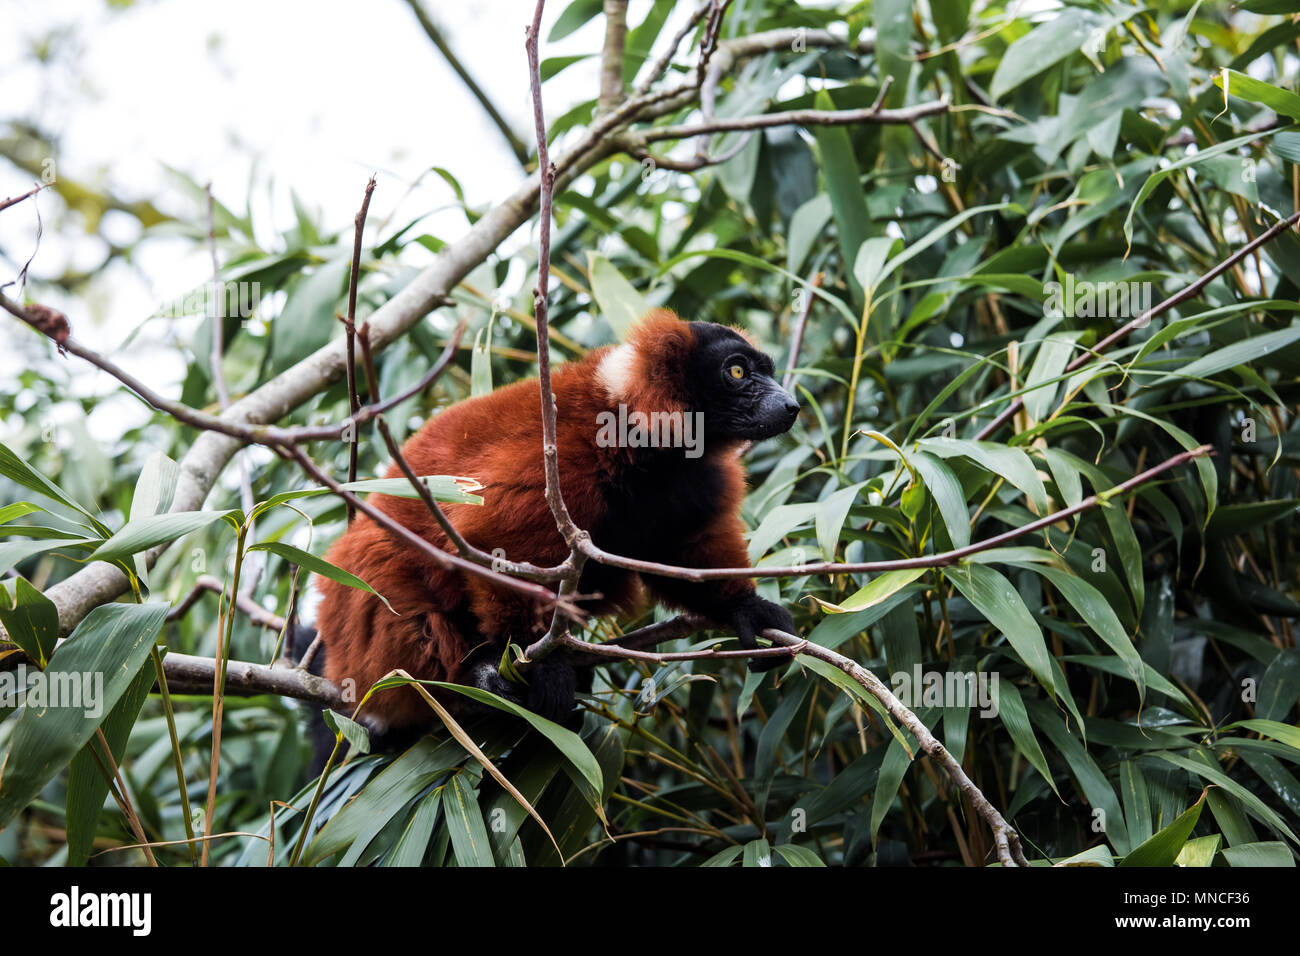 Red ruffed lemur animal sitting on the tree Stock Photo